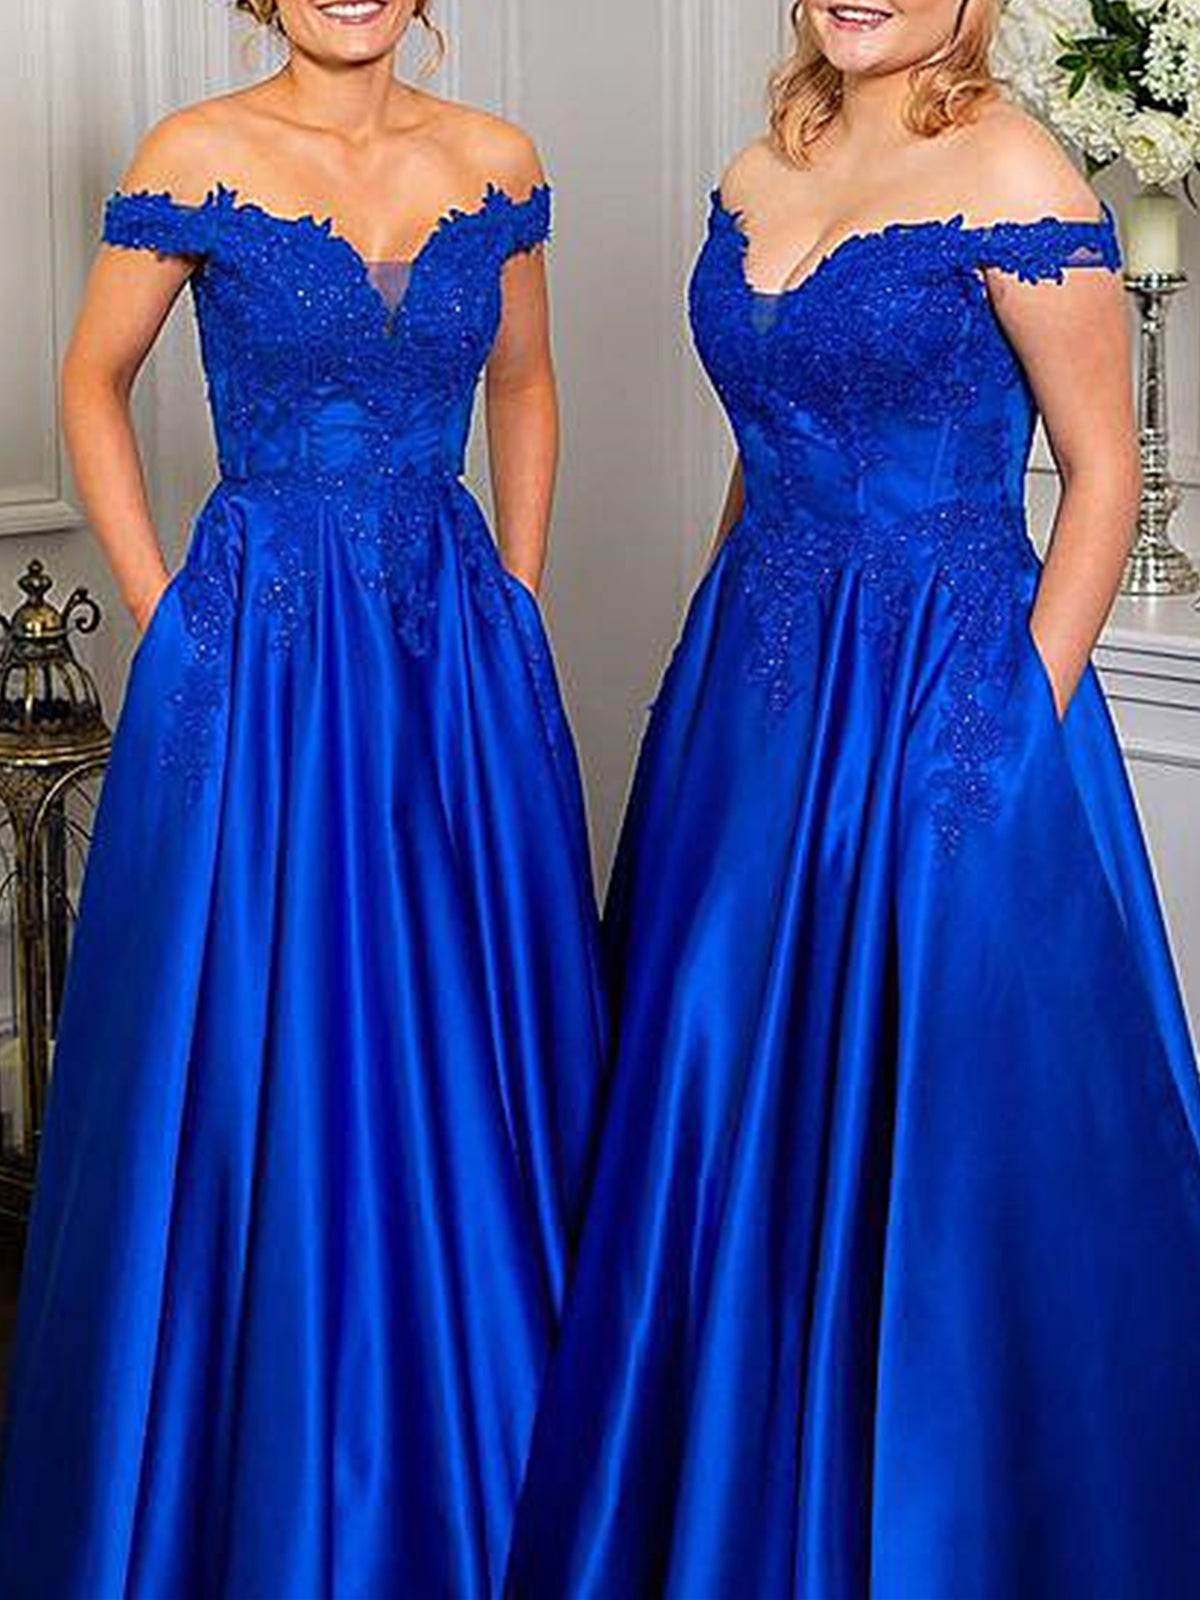 Off Shoulder Beaded Royal Blue Lace Long Prom Dresses, Royal Blue Lace Formal Graduation Evening Dresses 